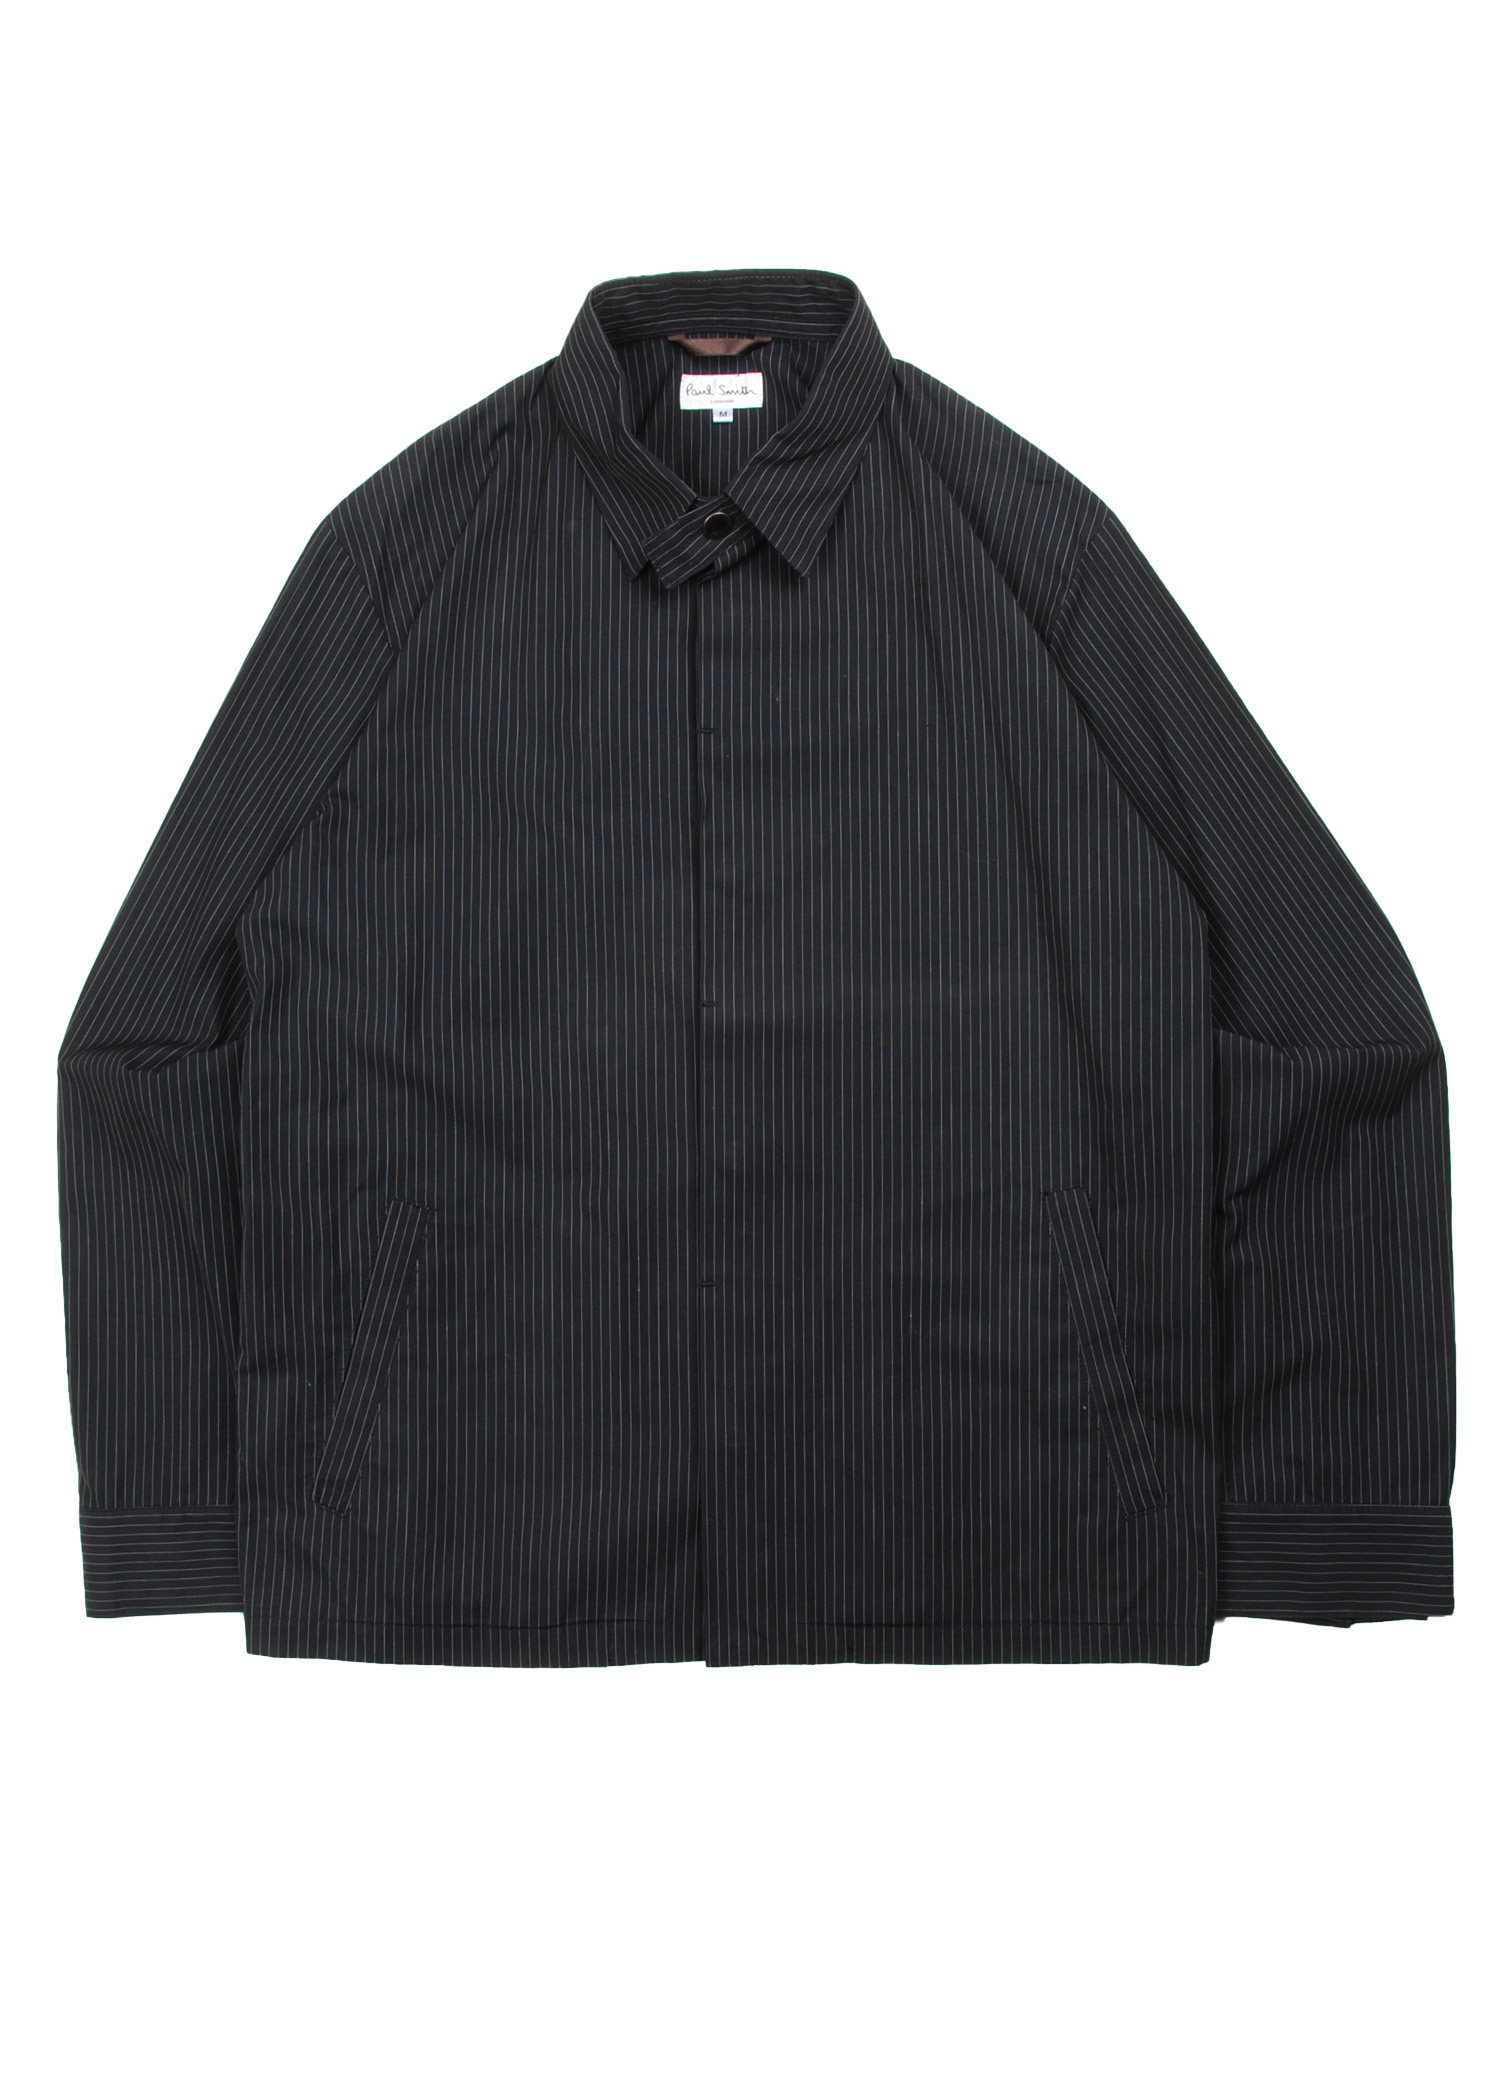 Paul Smith modern stripe shirts jacket